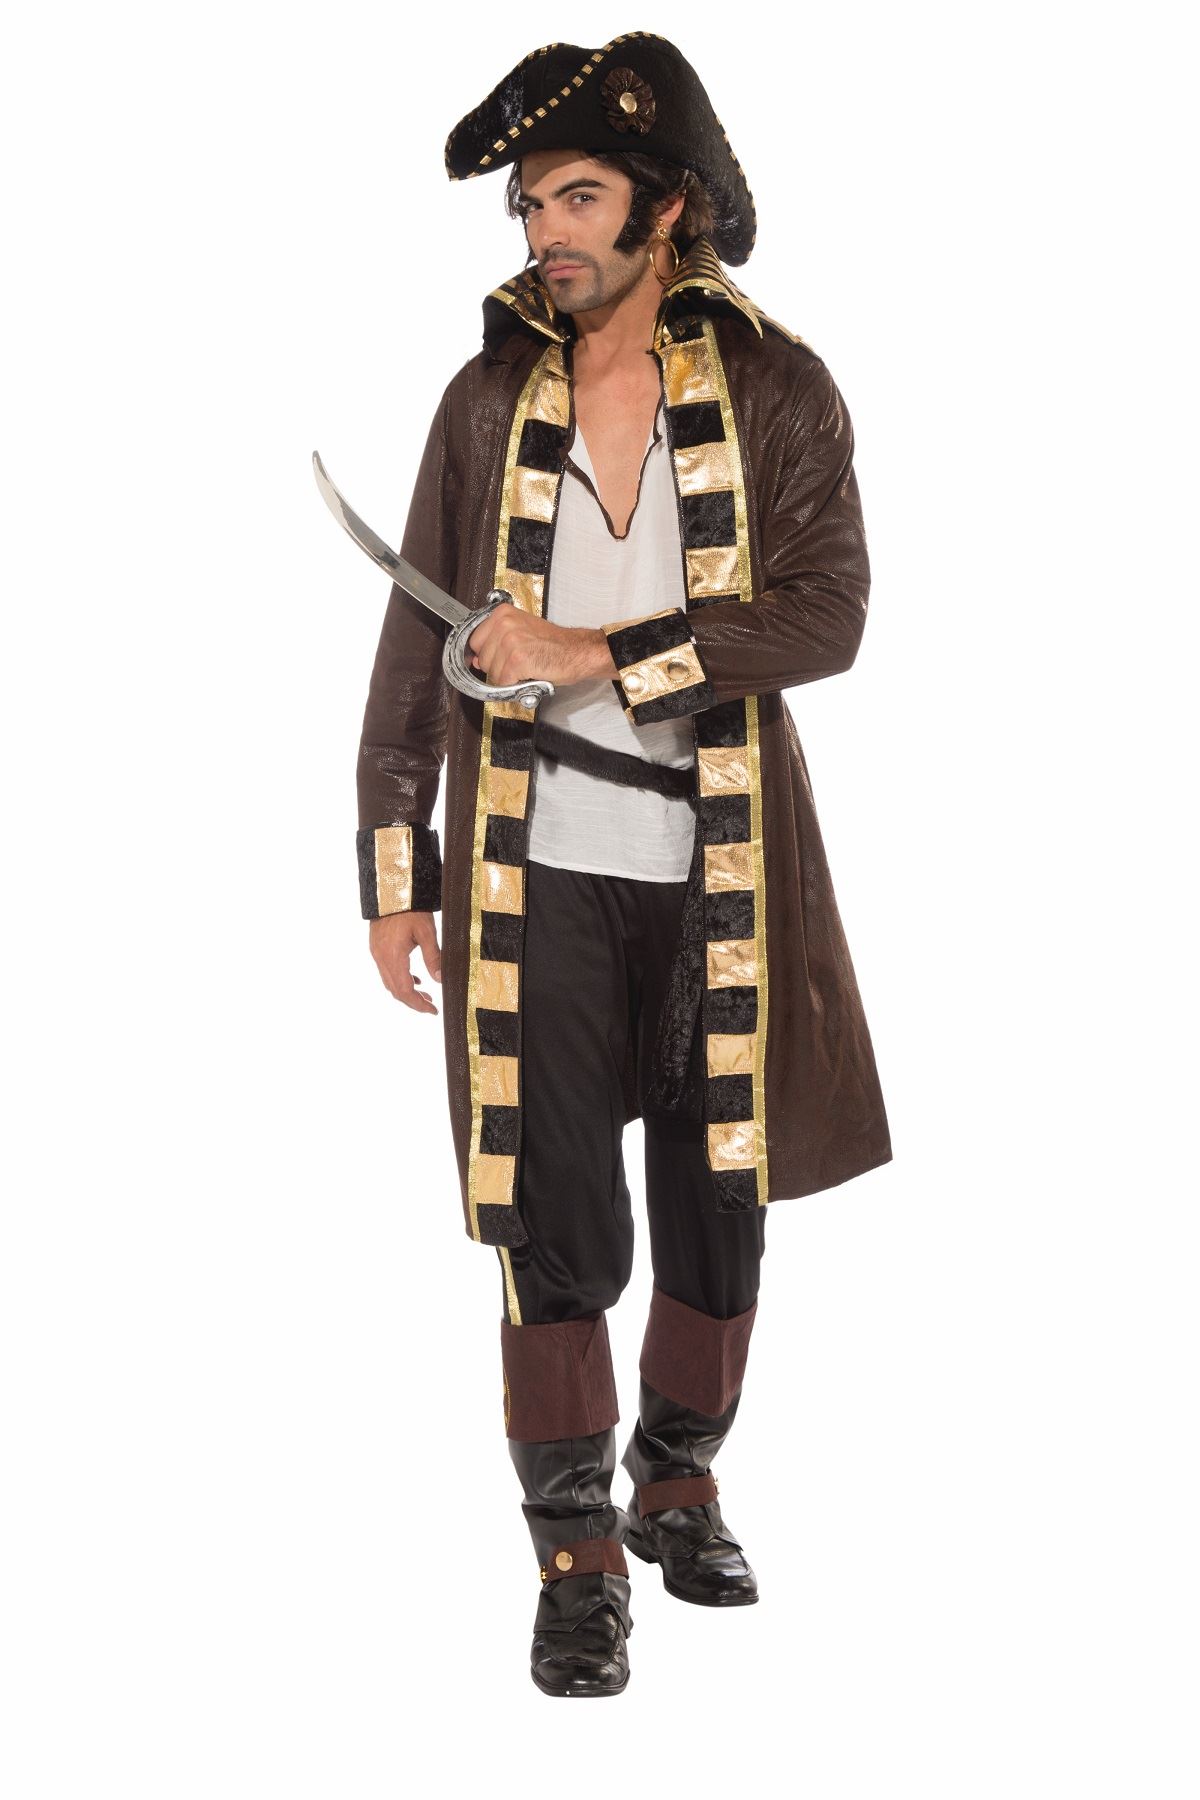 Adult Buccaneer Captain Men Pirate Costume | $38.99 | The Costume Land